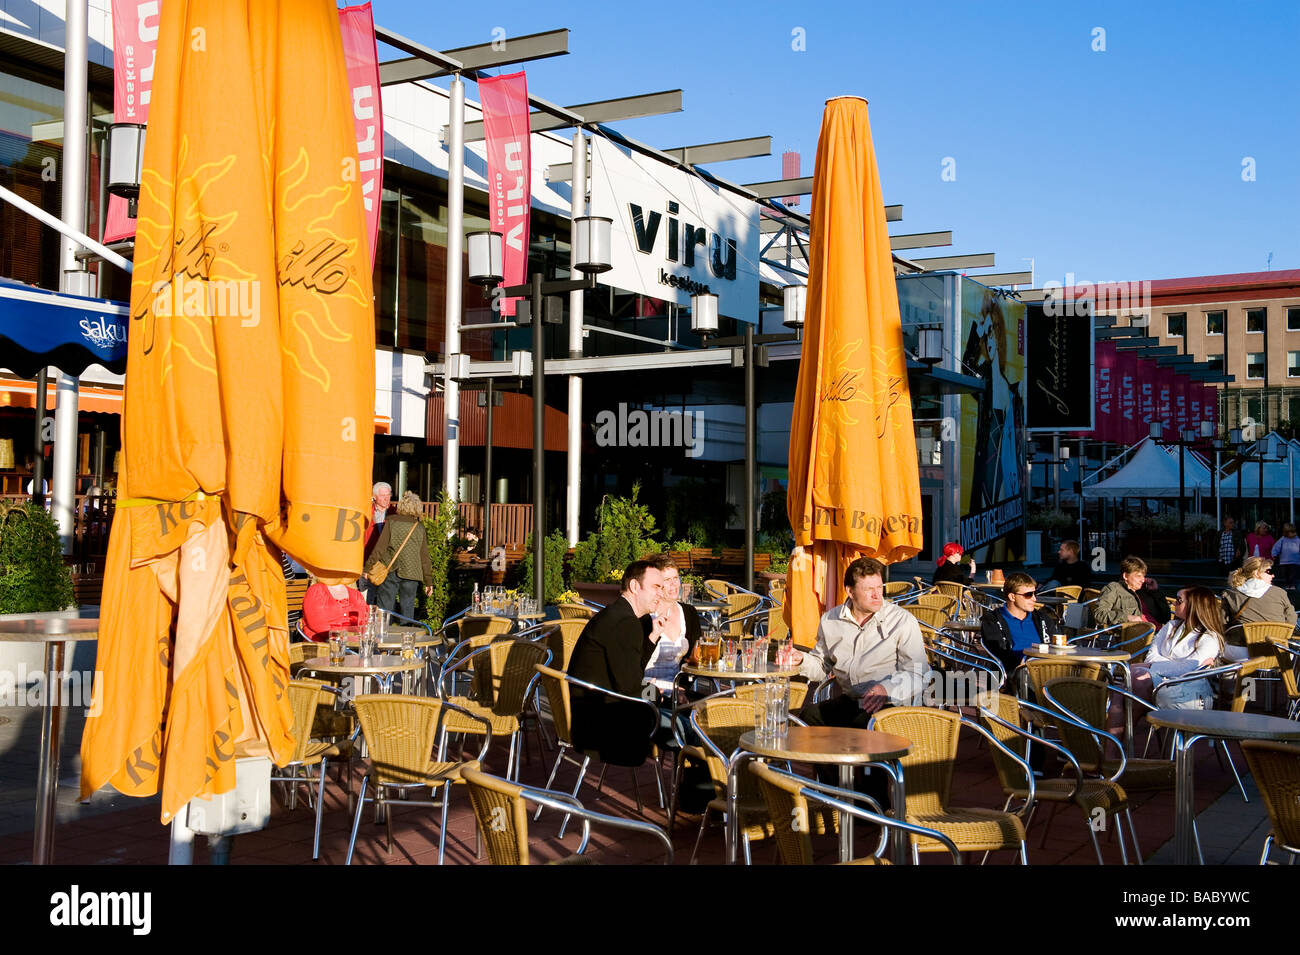 Estonia (Baltic States), Harju Region, Tallinn, the modern Town, Viru Keskus department store cafe terrace Stock Photo